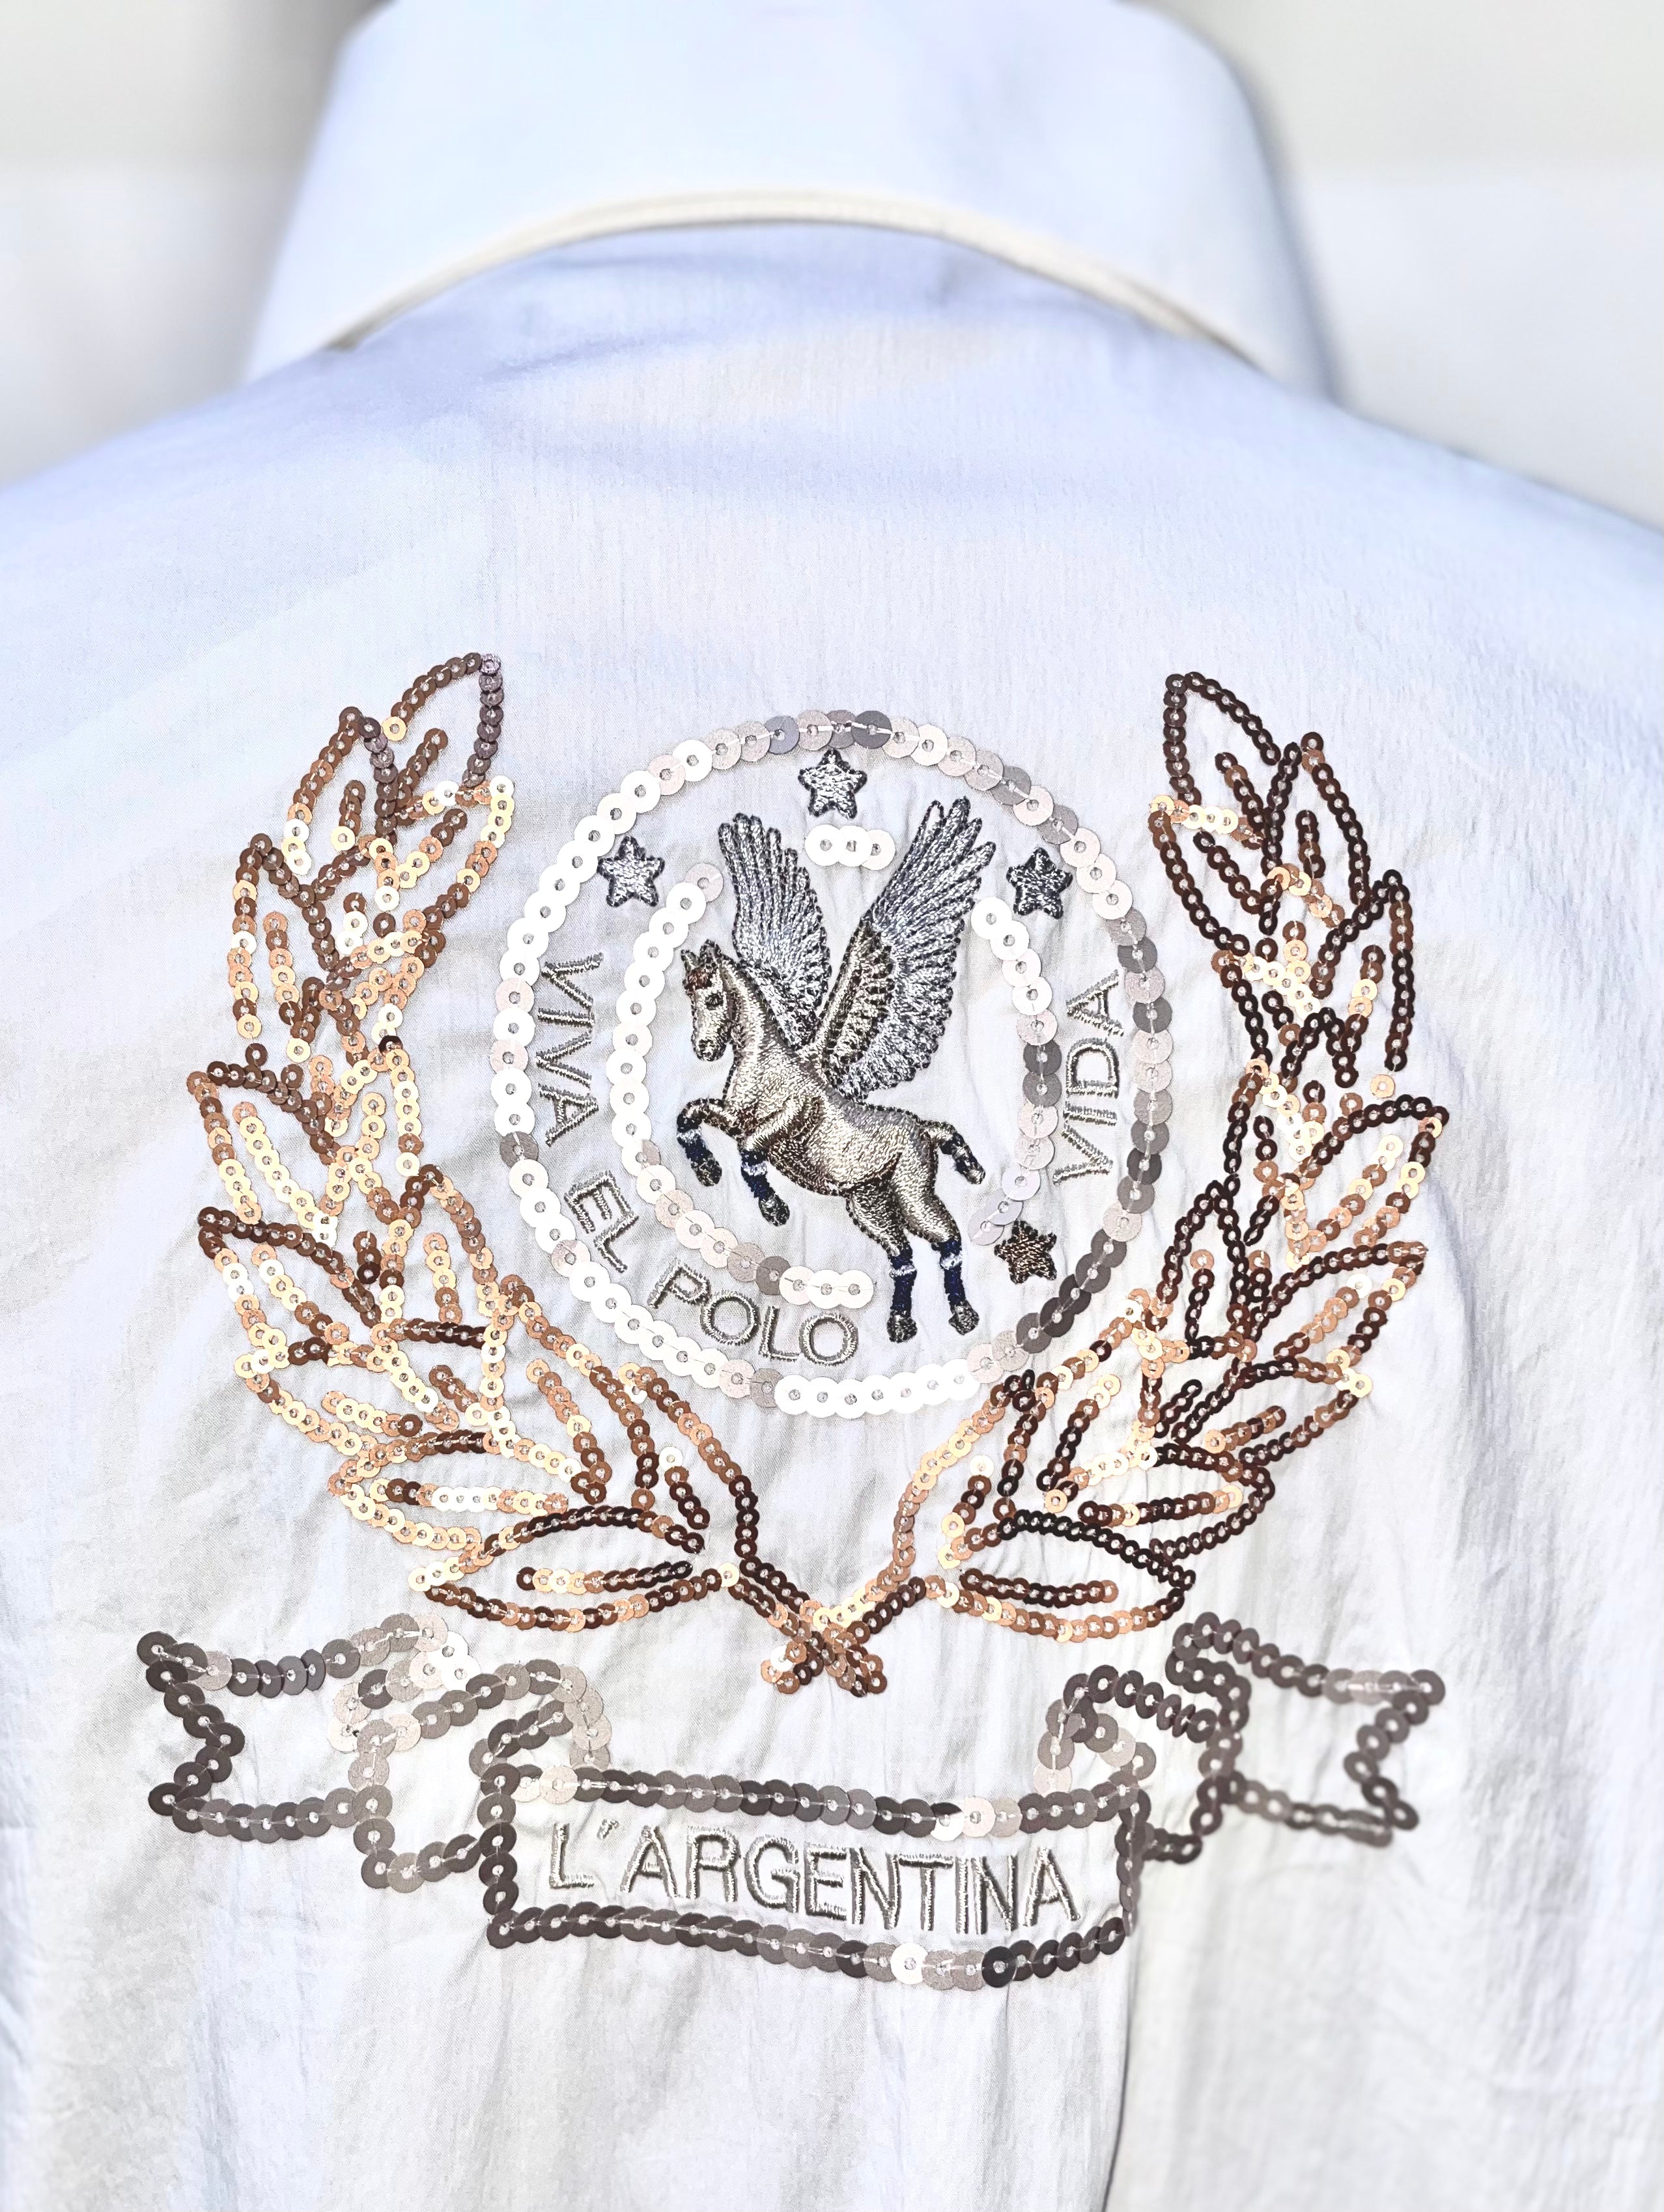 L’Argentina Badged White Shirt